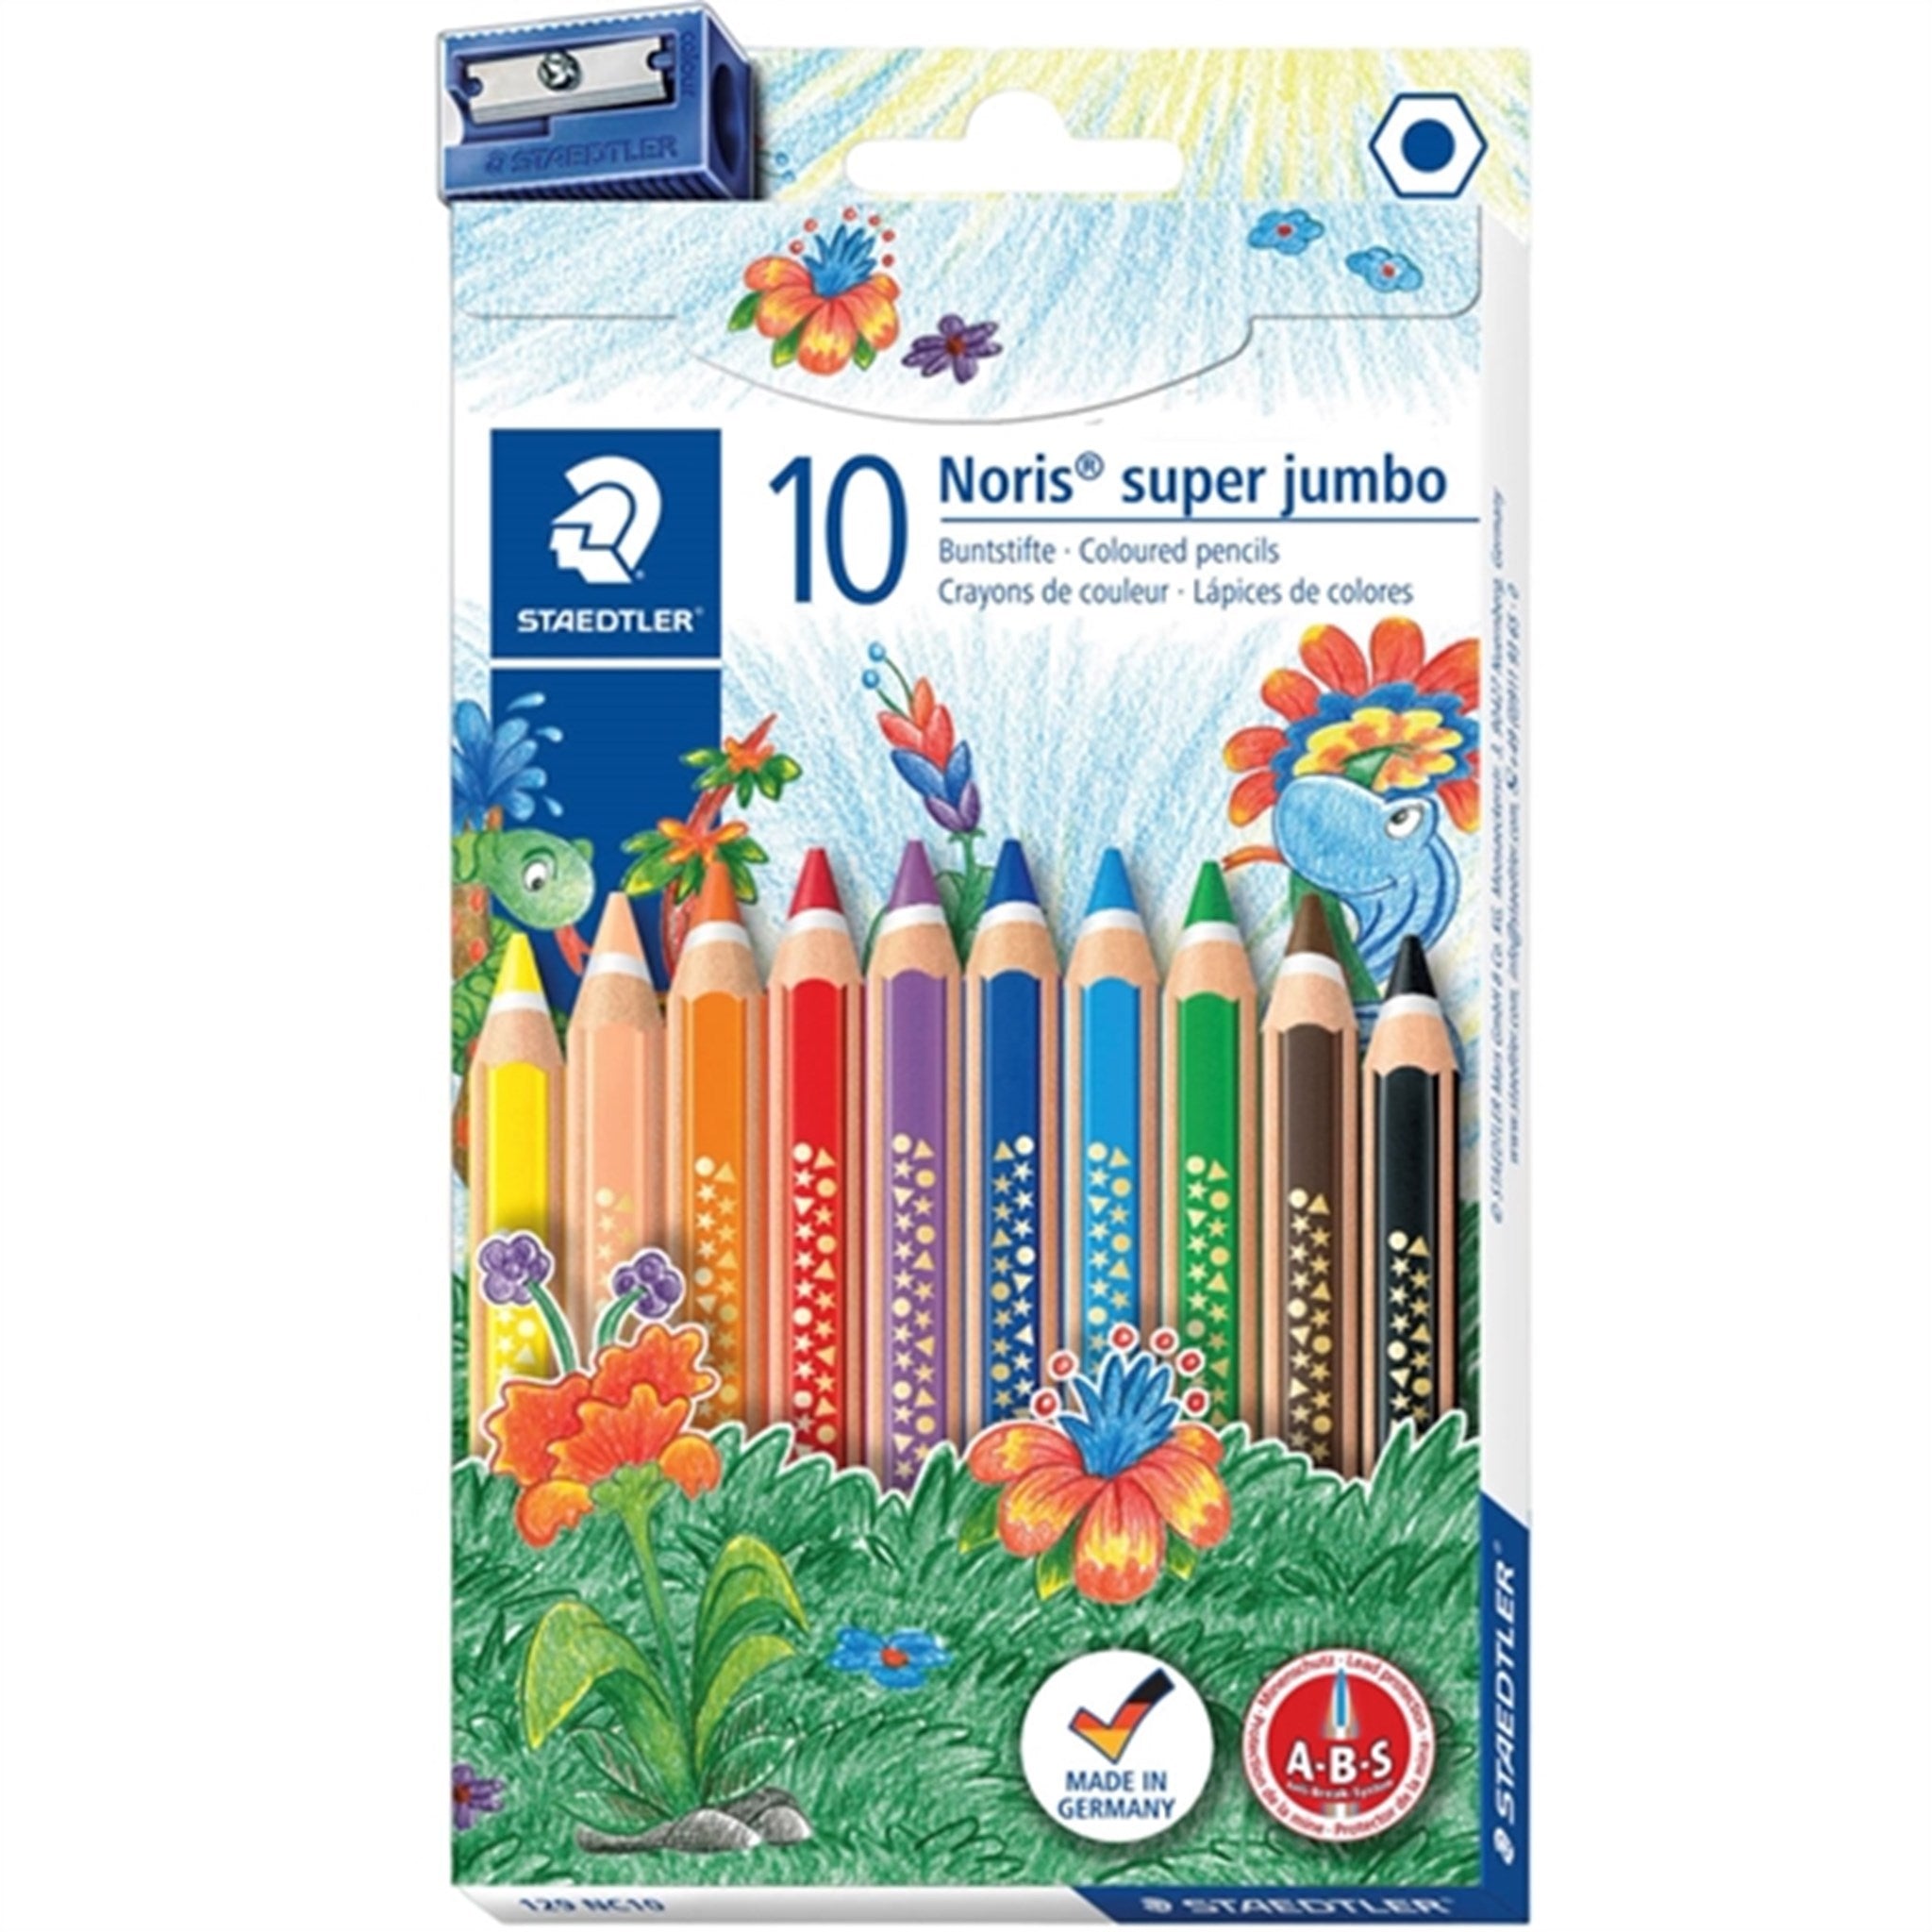 Staedtler Colored Pencil Noris Club Super Jumbo